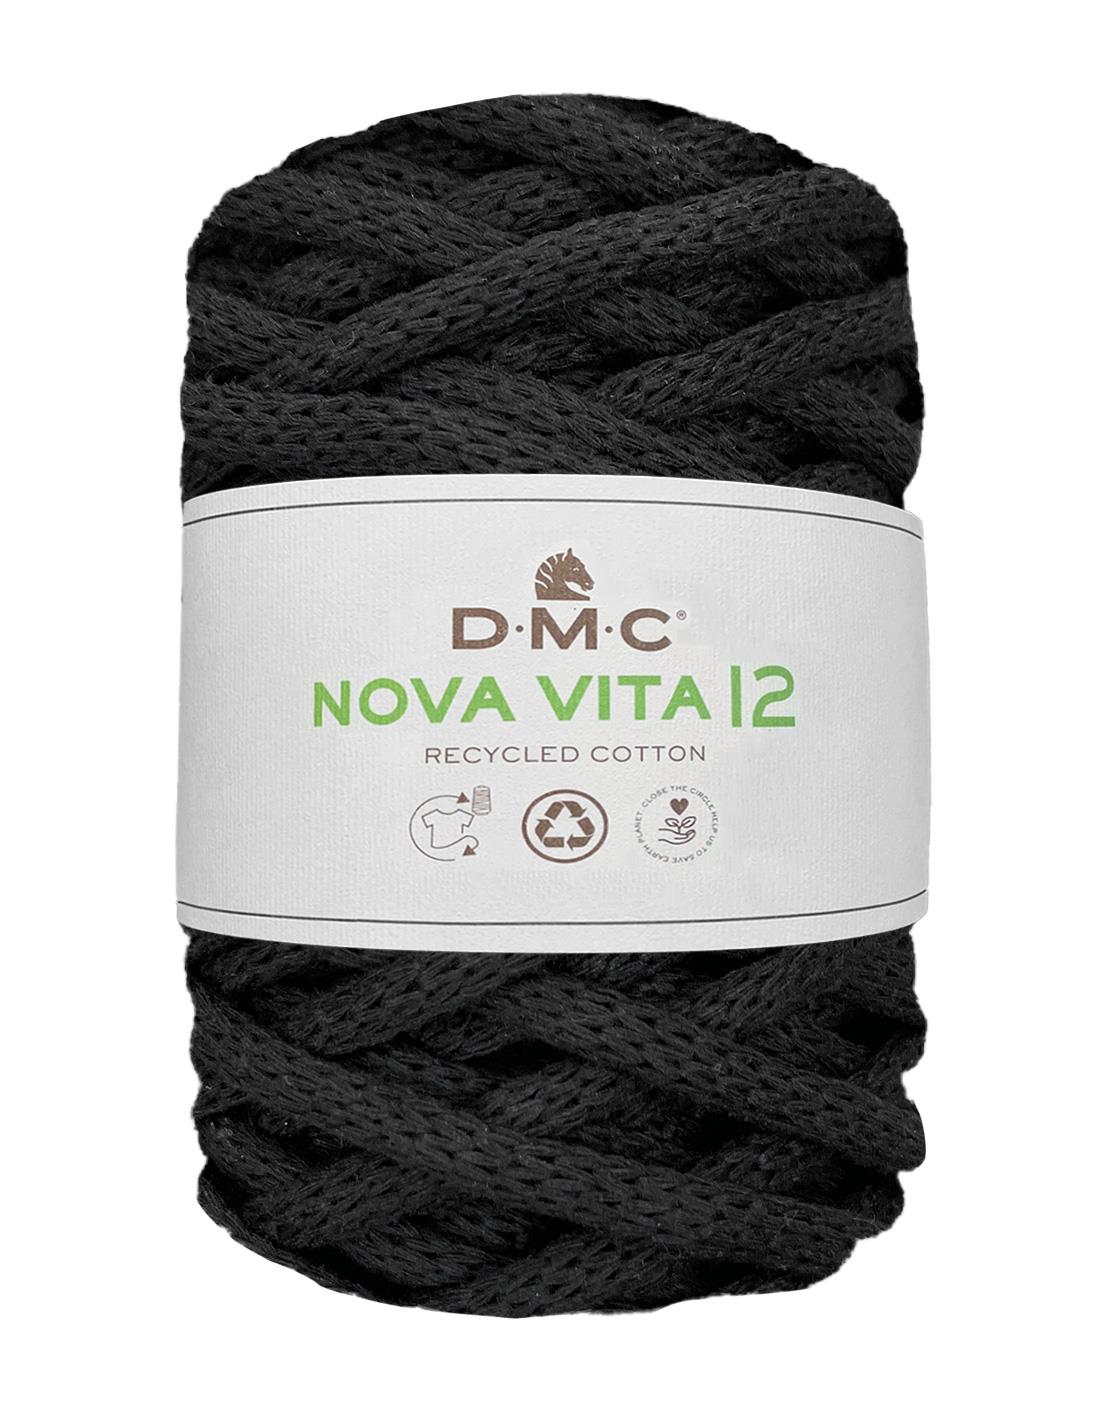 DMC Nova Vita 12 Black (02) recycled cotton macrame cord (55m)